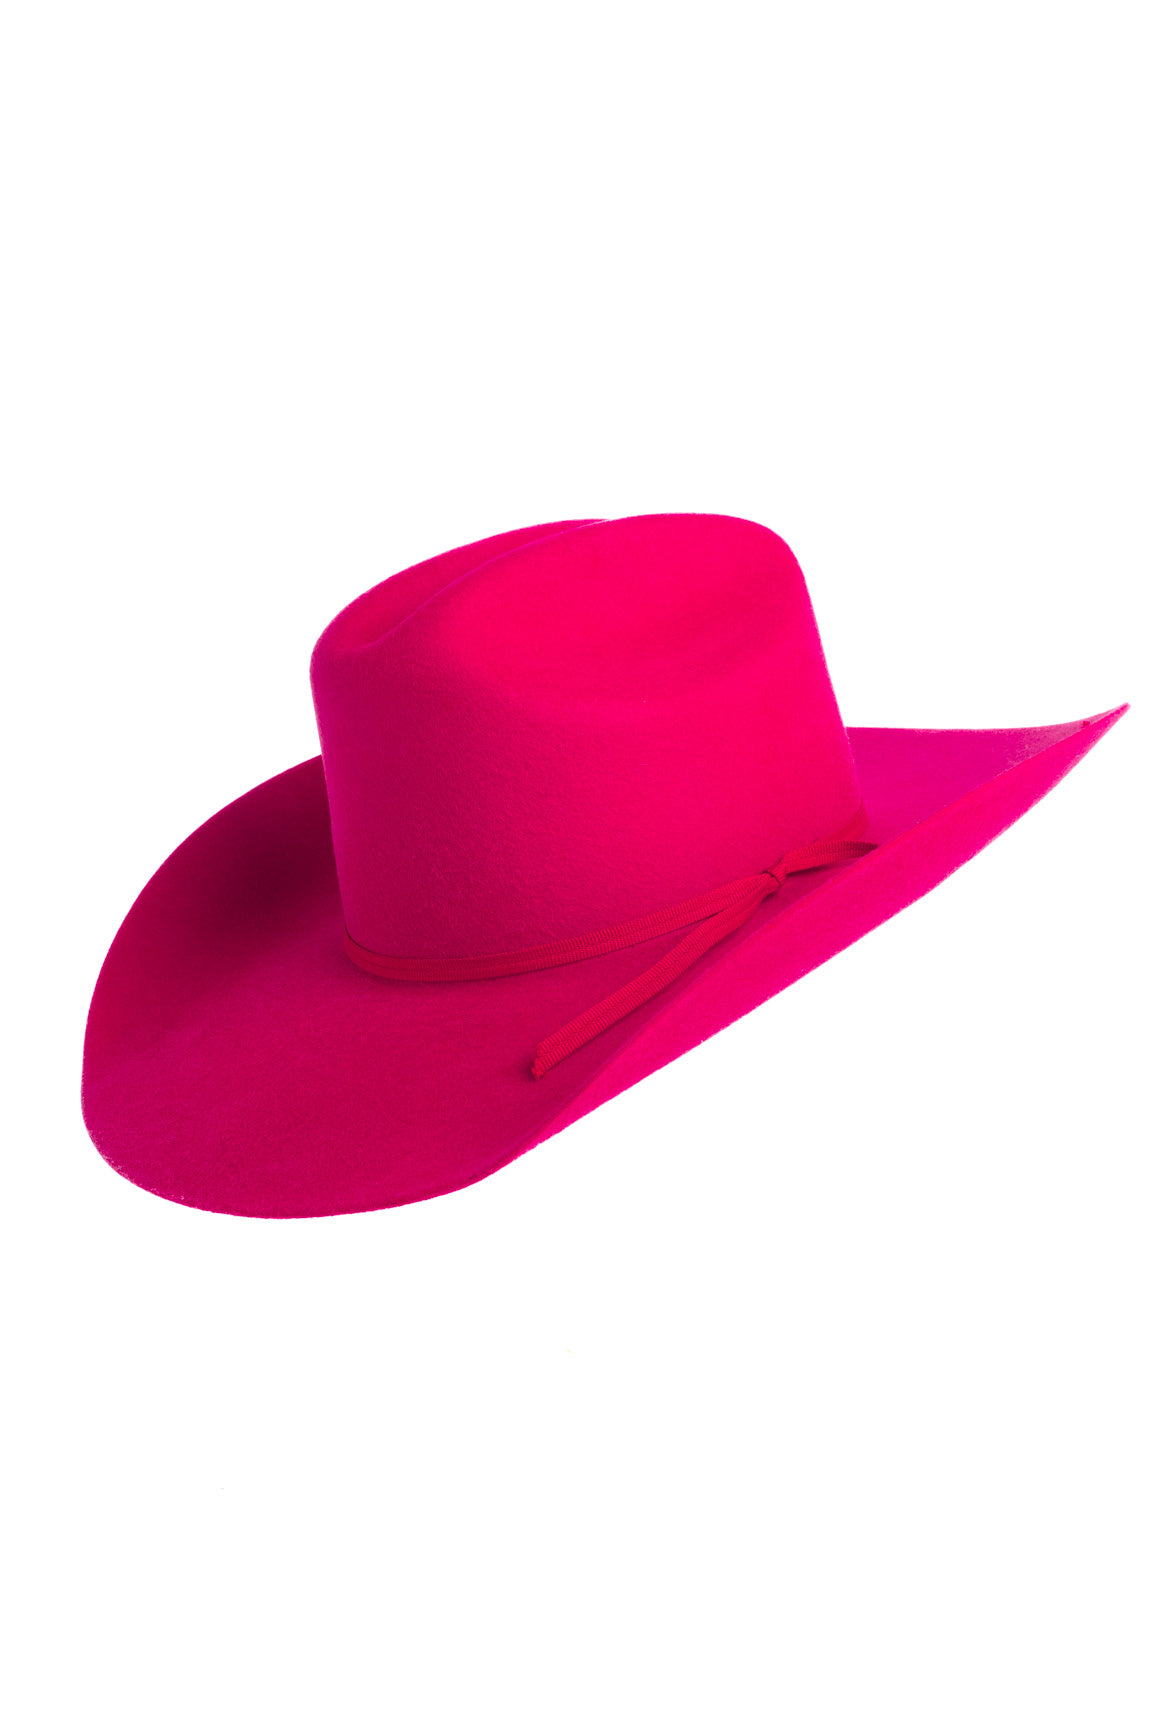 Rock'em Country Malboro 6X Color Edition Felt Hat